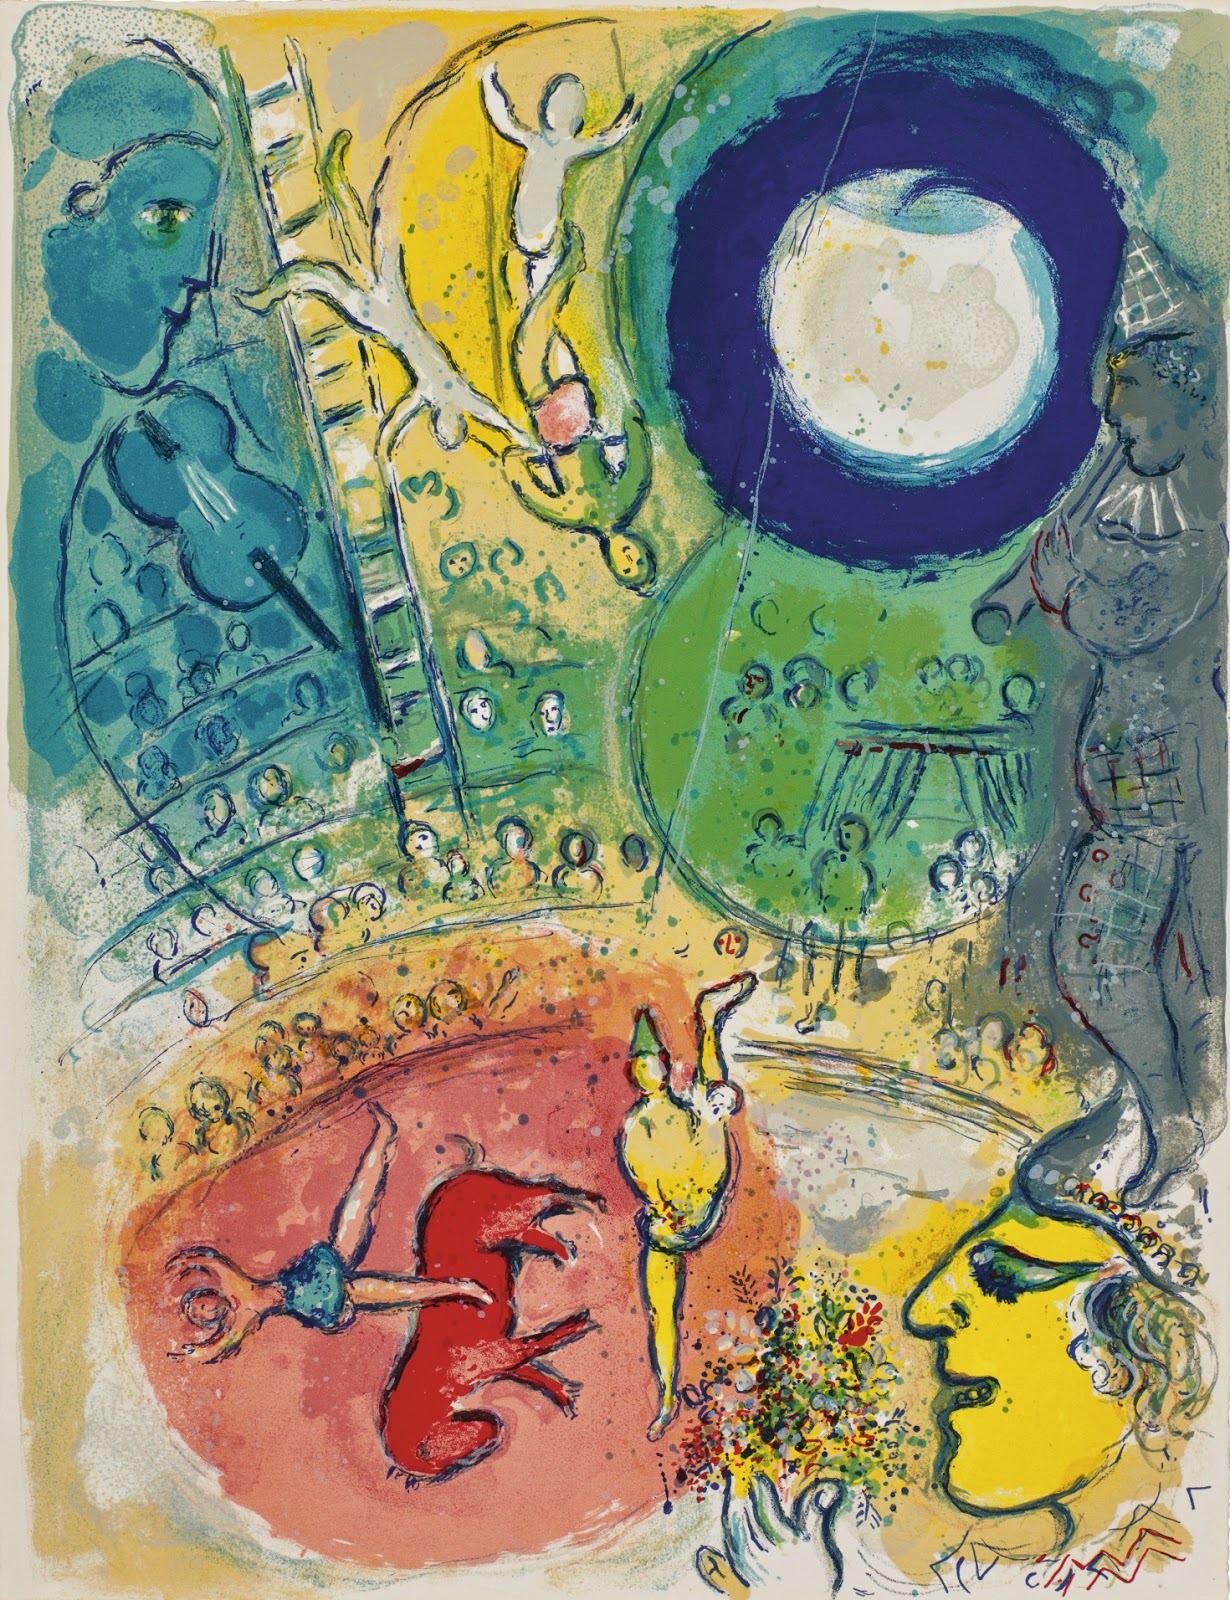 Marc+Chagall-1887-1985 (49).jpg